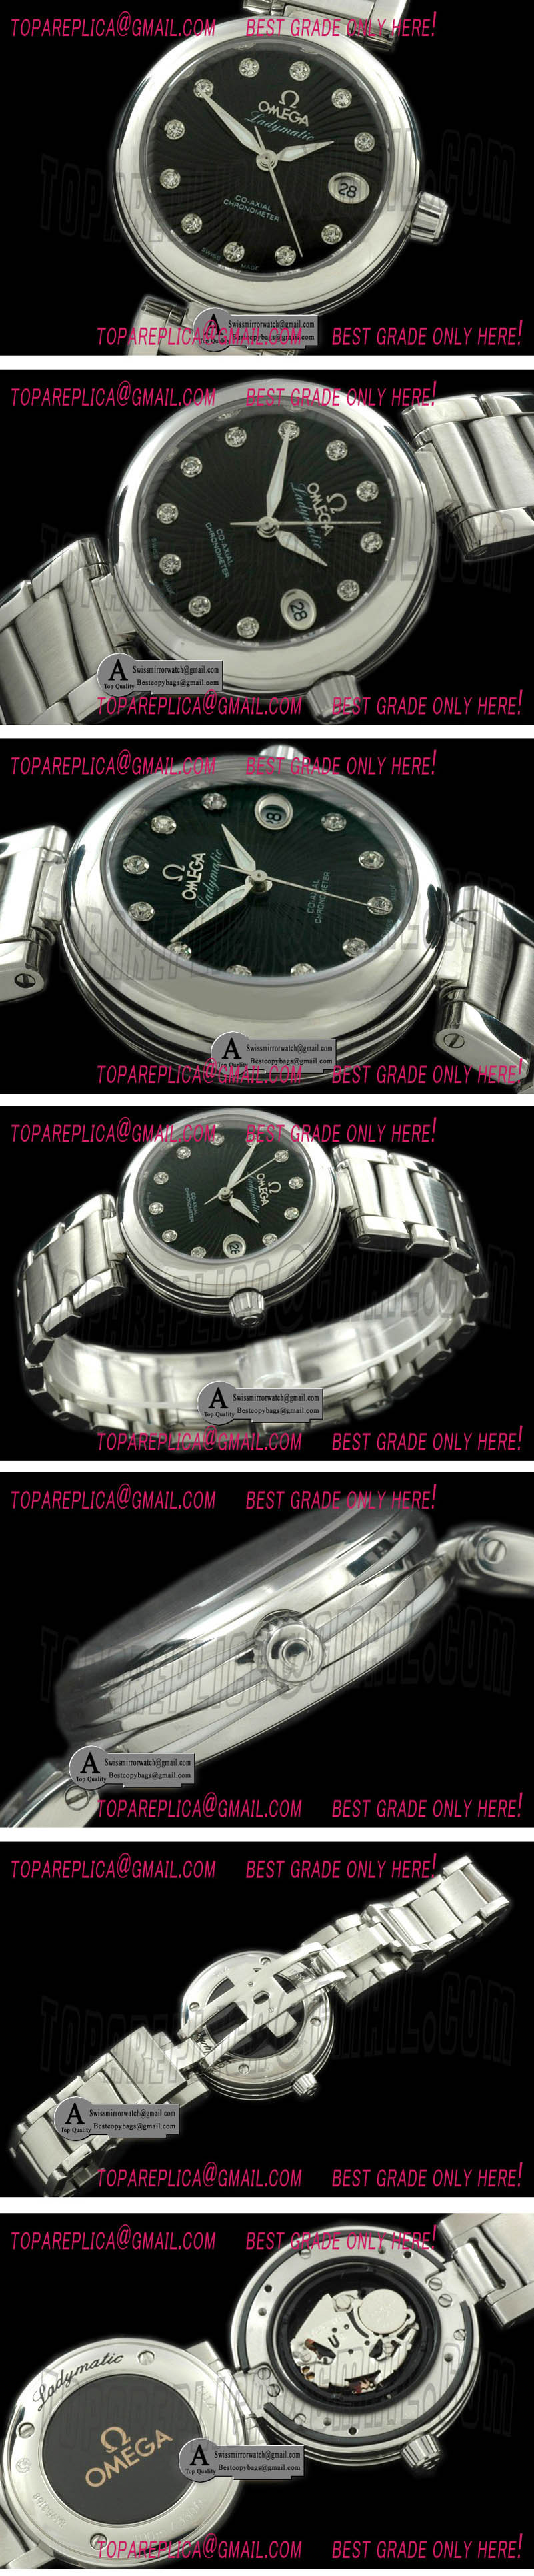 Omega 425.30.34.20.51.001 Deville Ladymatic SS/SS Black Swiss Quartz Replica Watches